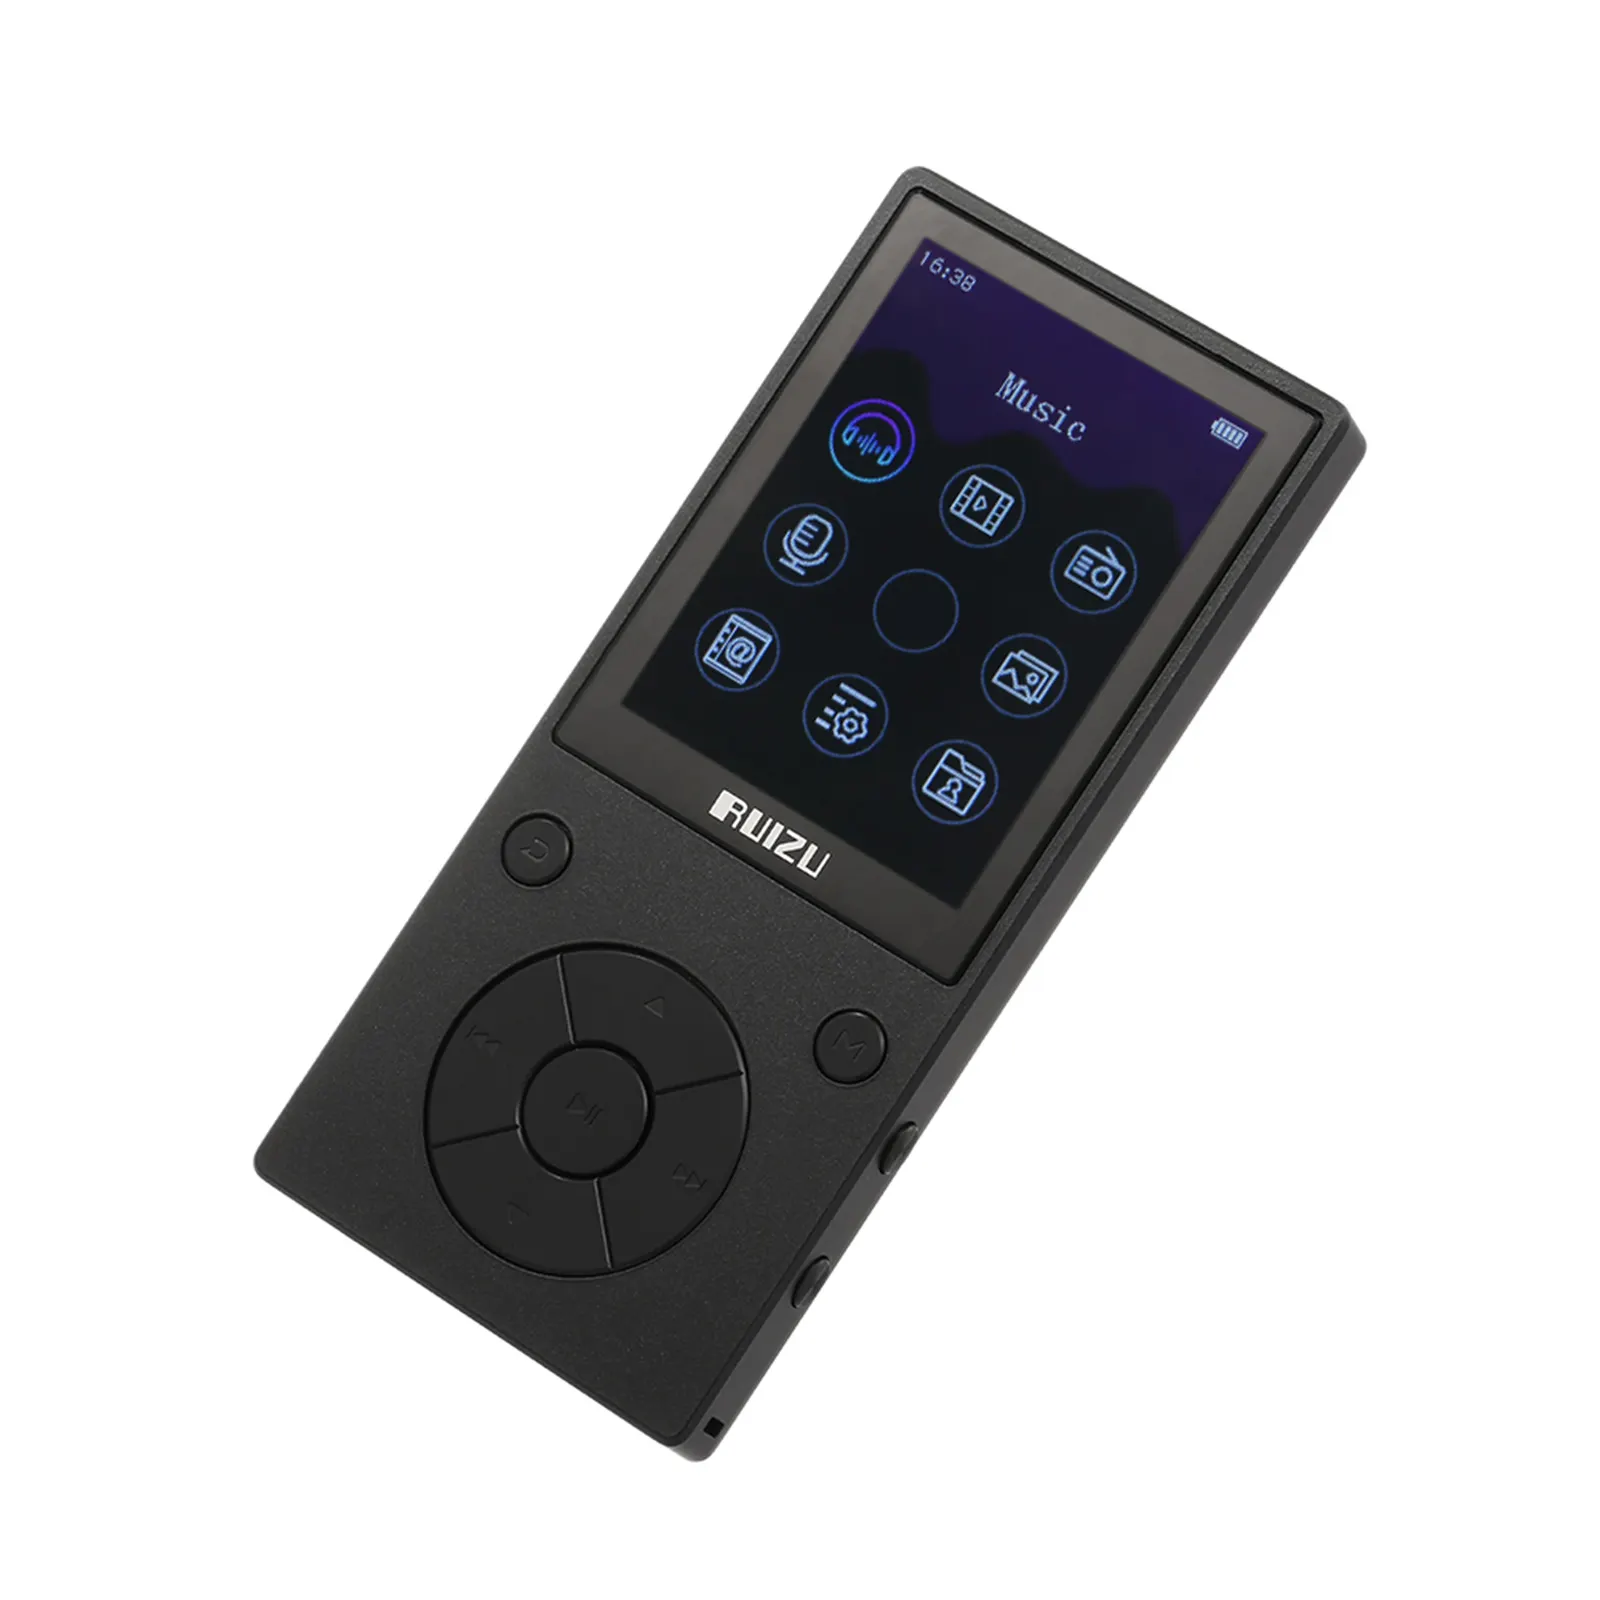 D11 8GB MP3 MP4 çalar BT müzik çalar FM radyo ses kaydedici TF kart yuvası 3.5mm kulaklık dahili mikrofon hoparlör desteği Stopwatc